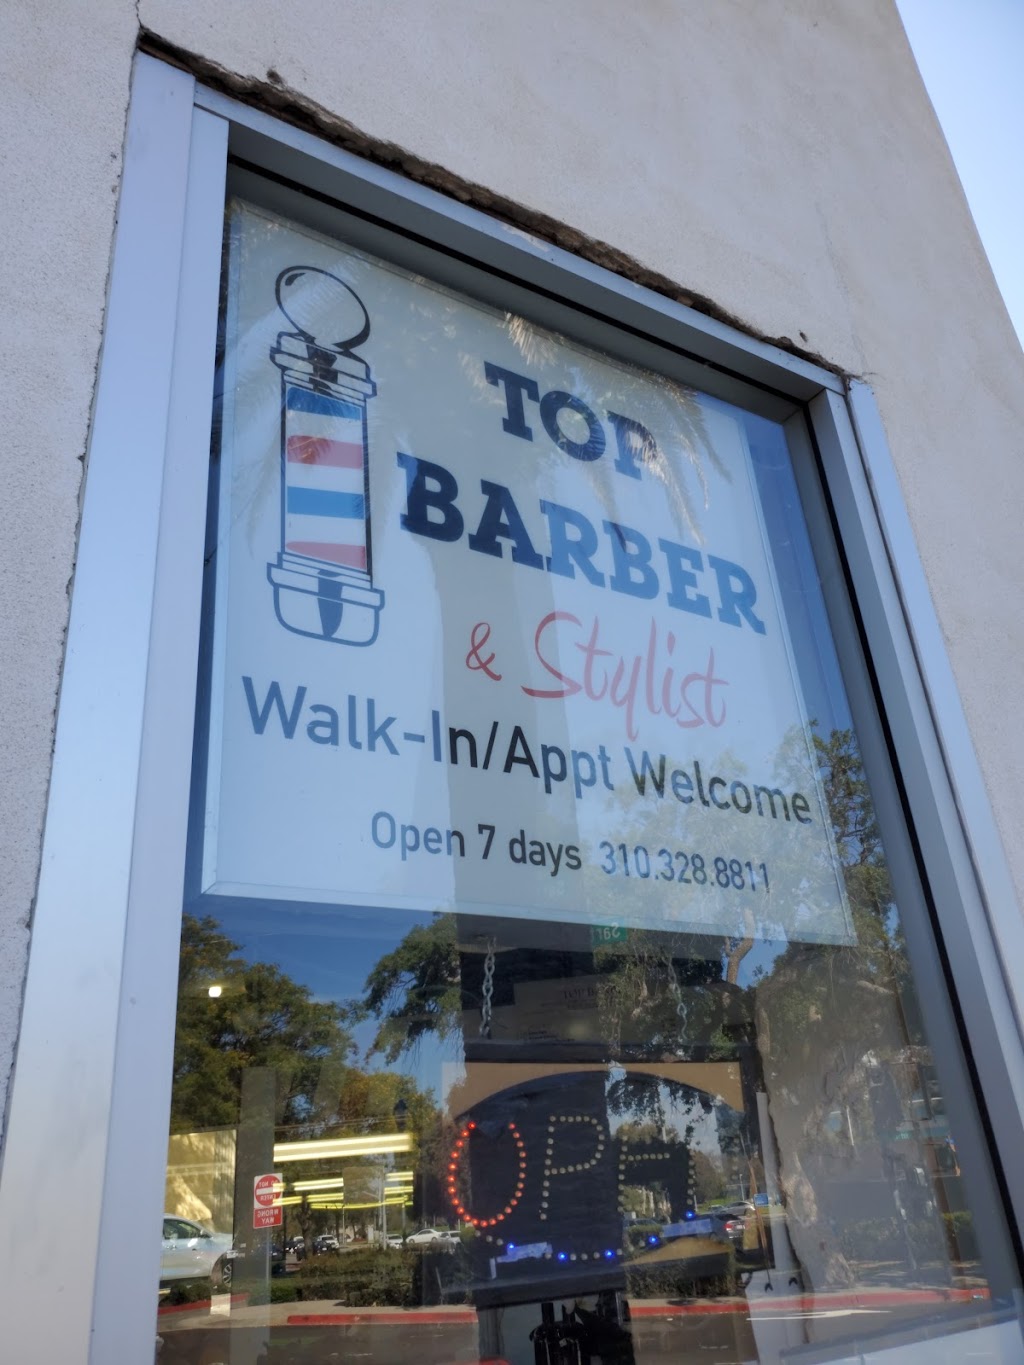 Top Barber | 1119 Sartori Ave, Torrance, CA 90501 | Phone: (310) 328-8811